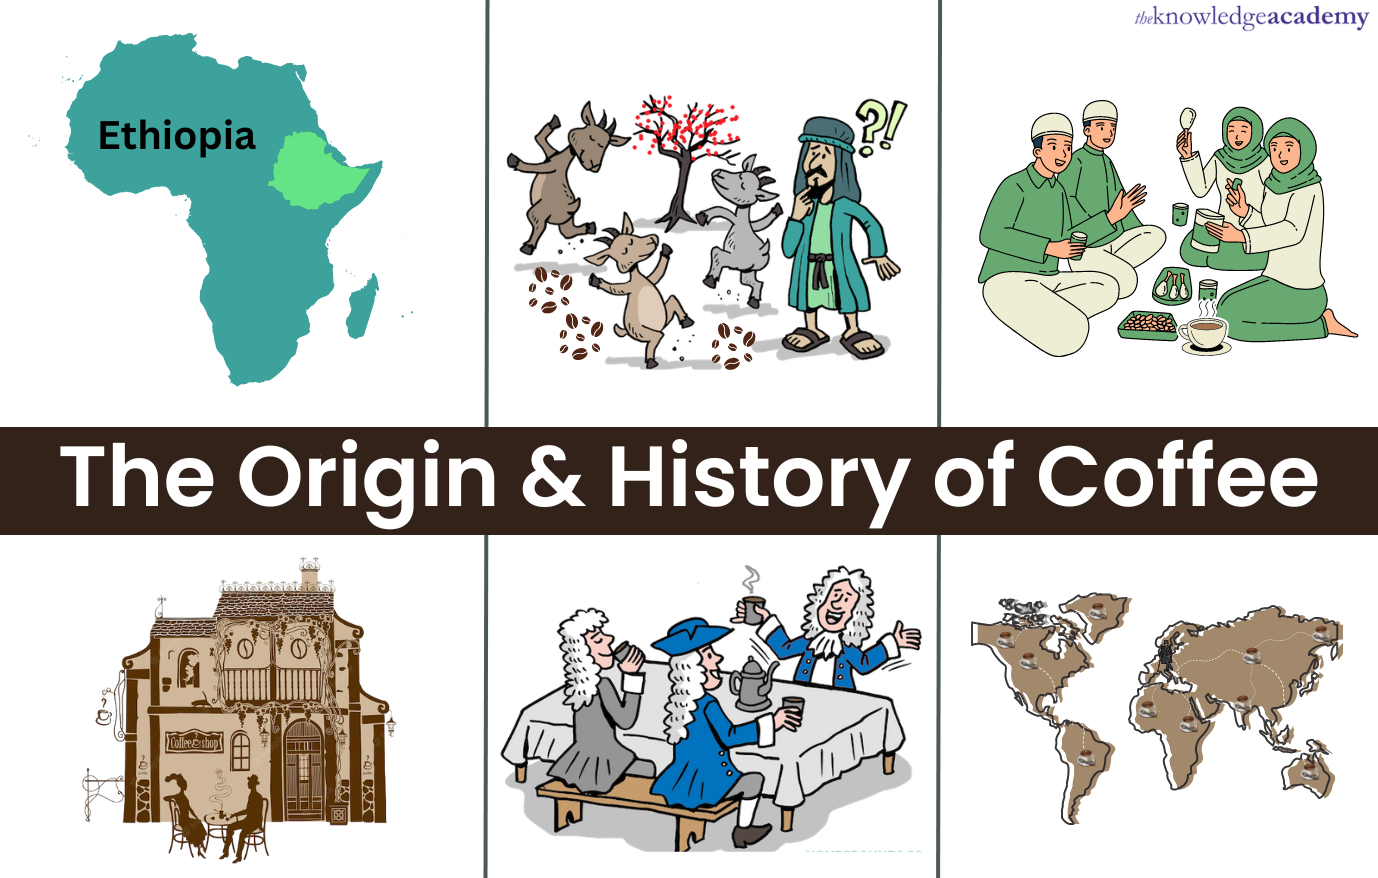 Coffee: origin and history